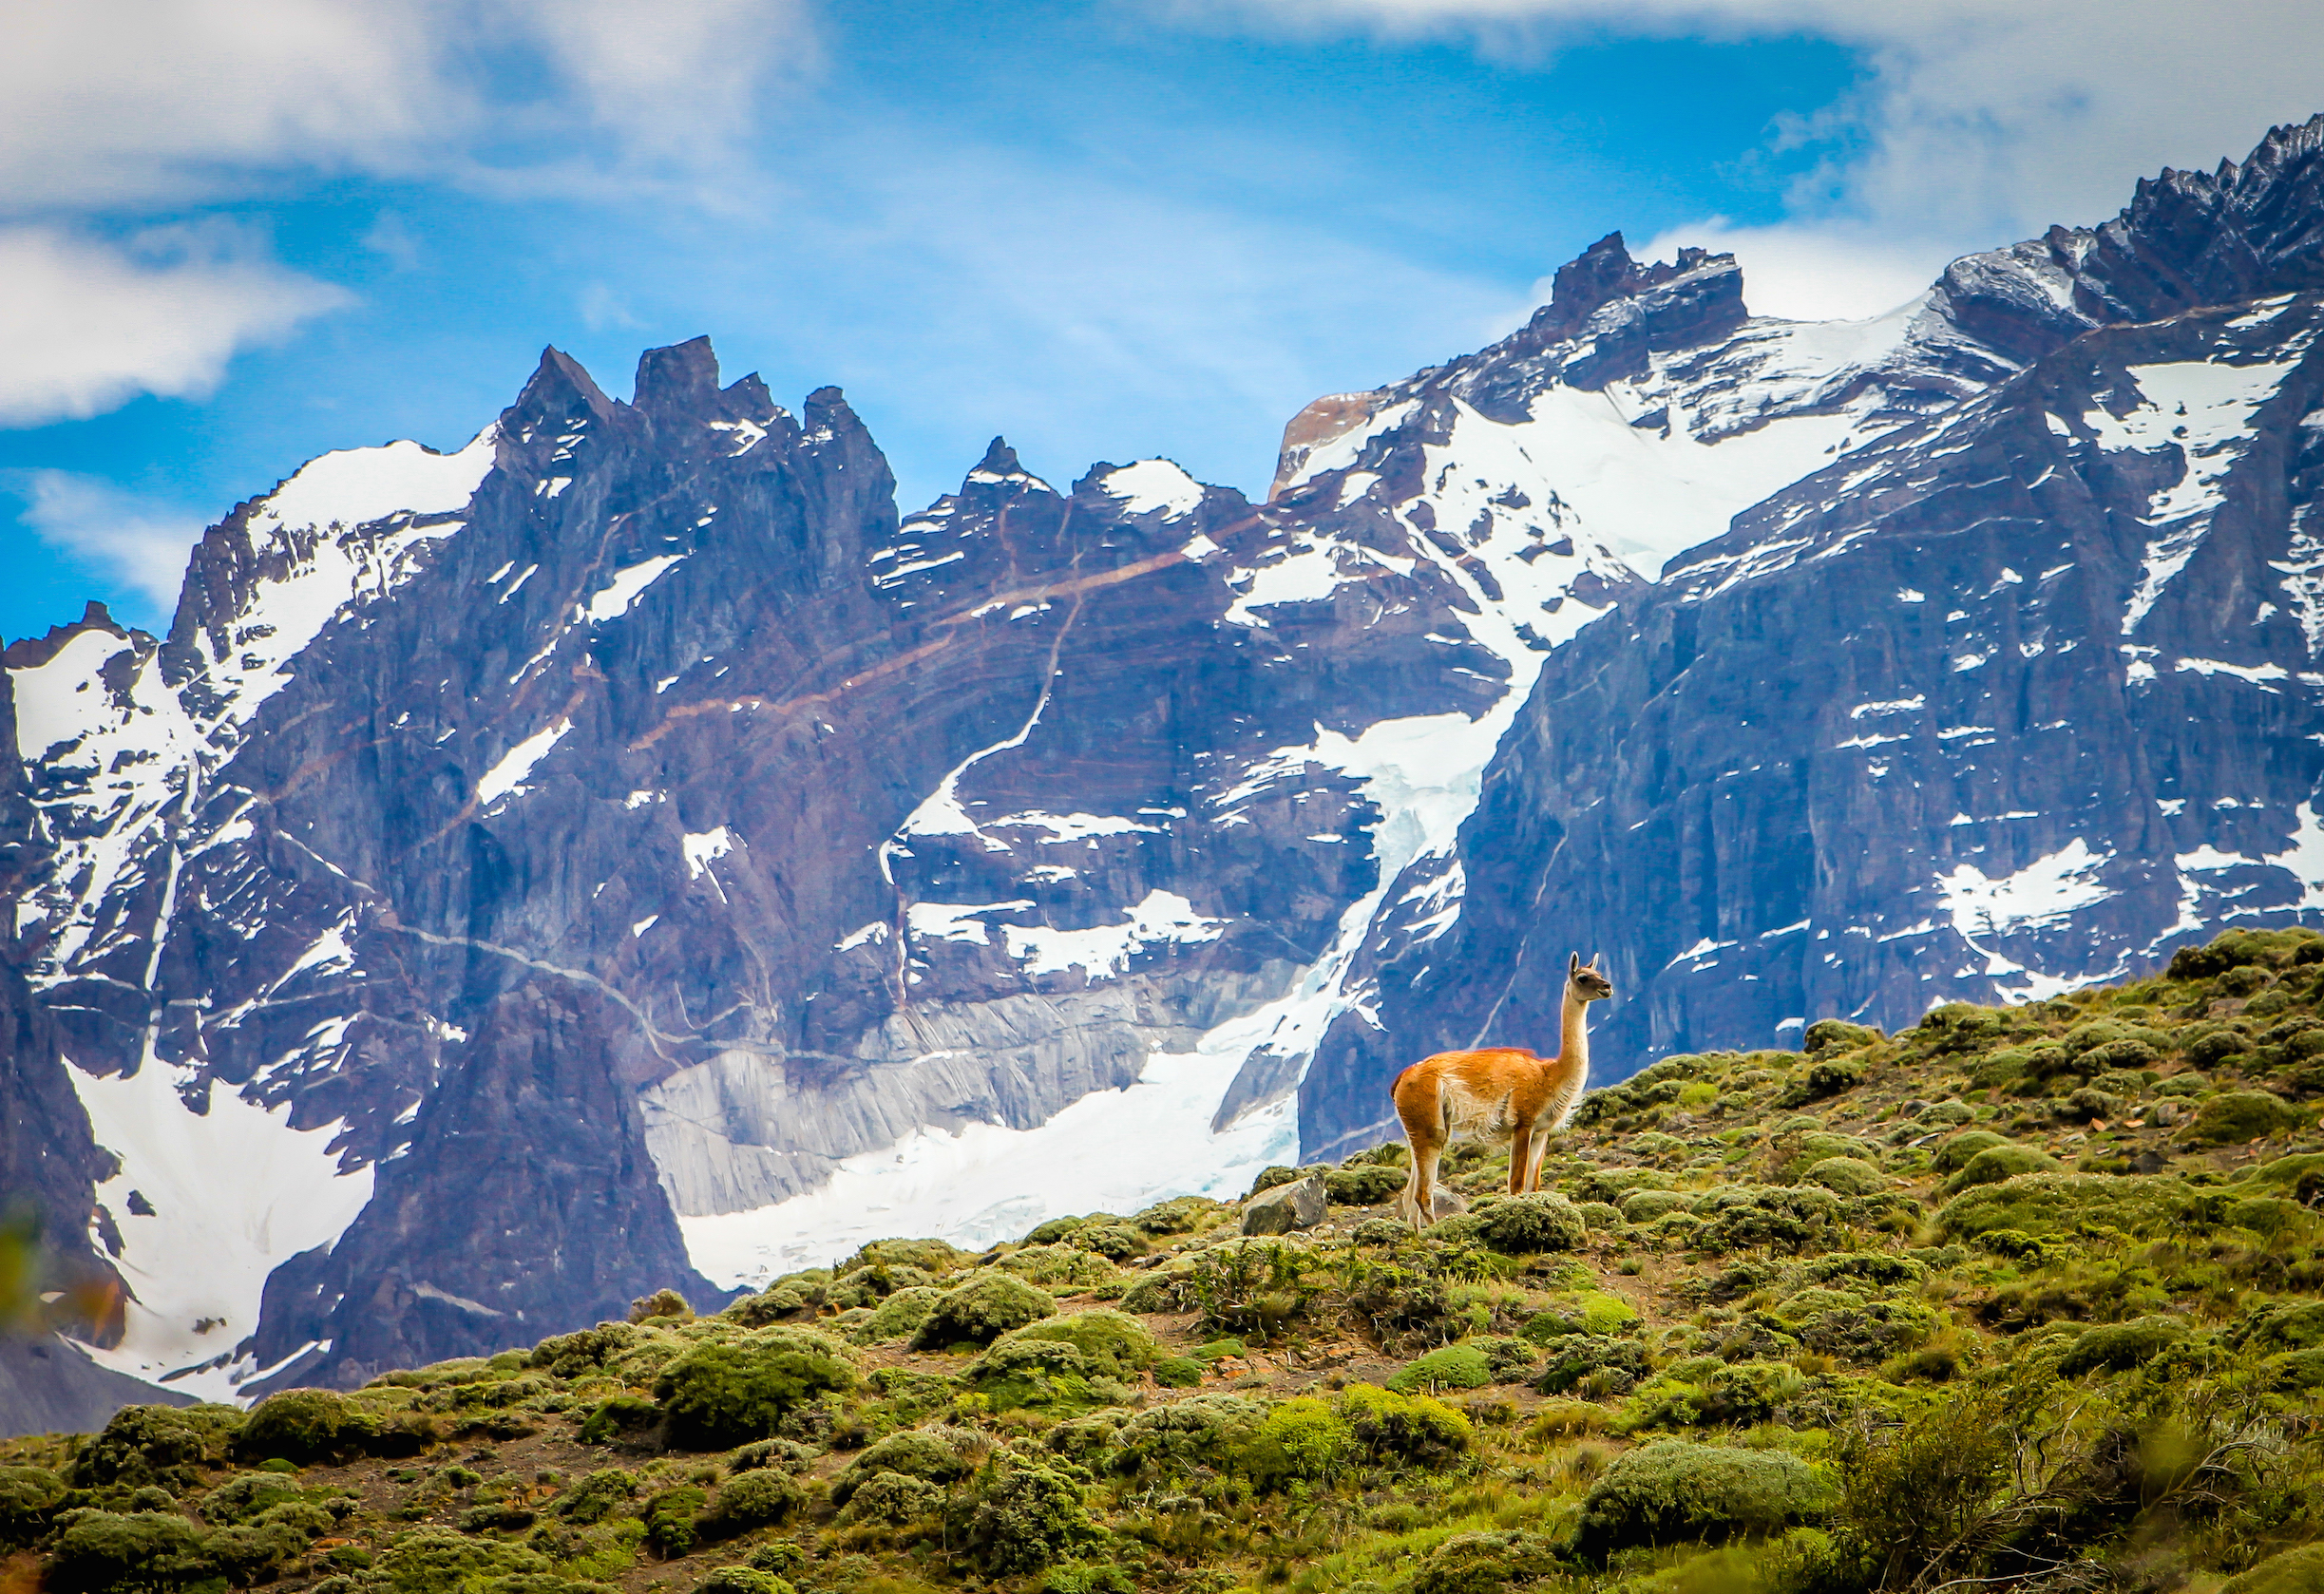 Top 10 National Parks- Torres del Paine National Park